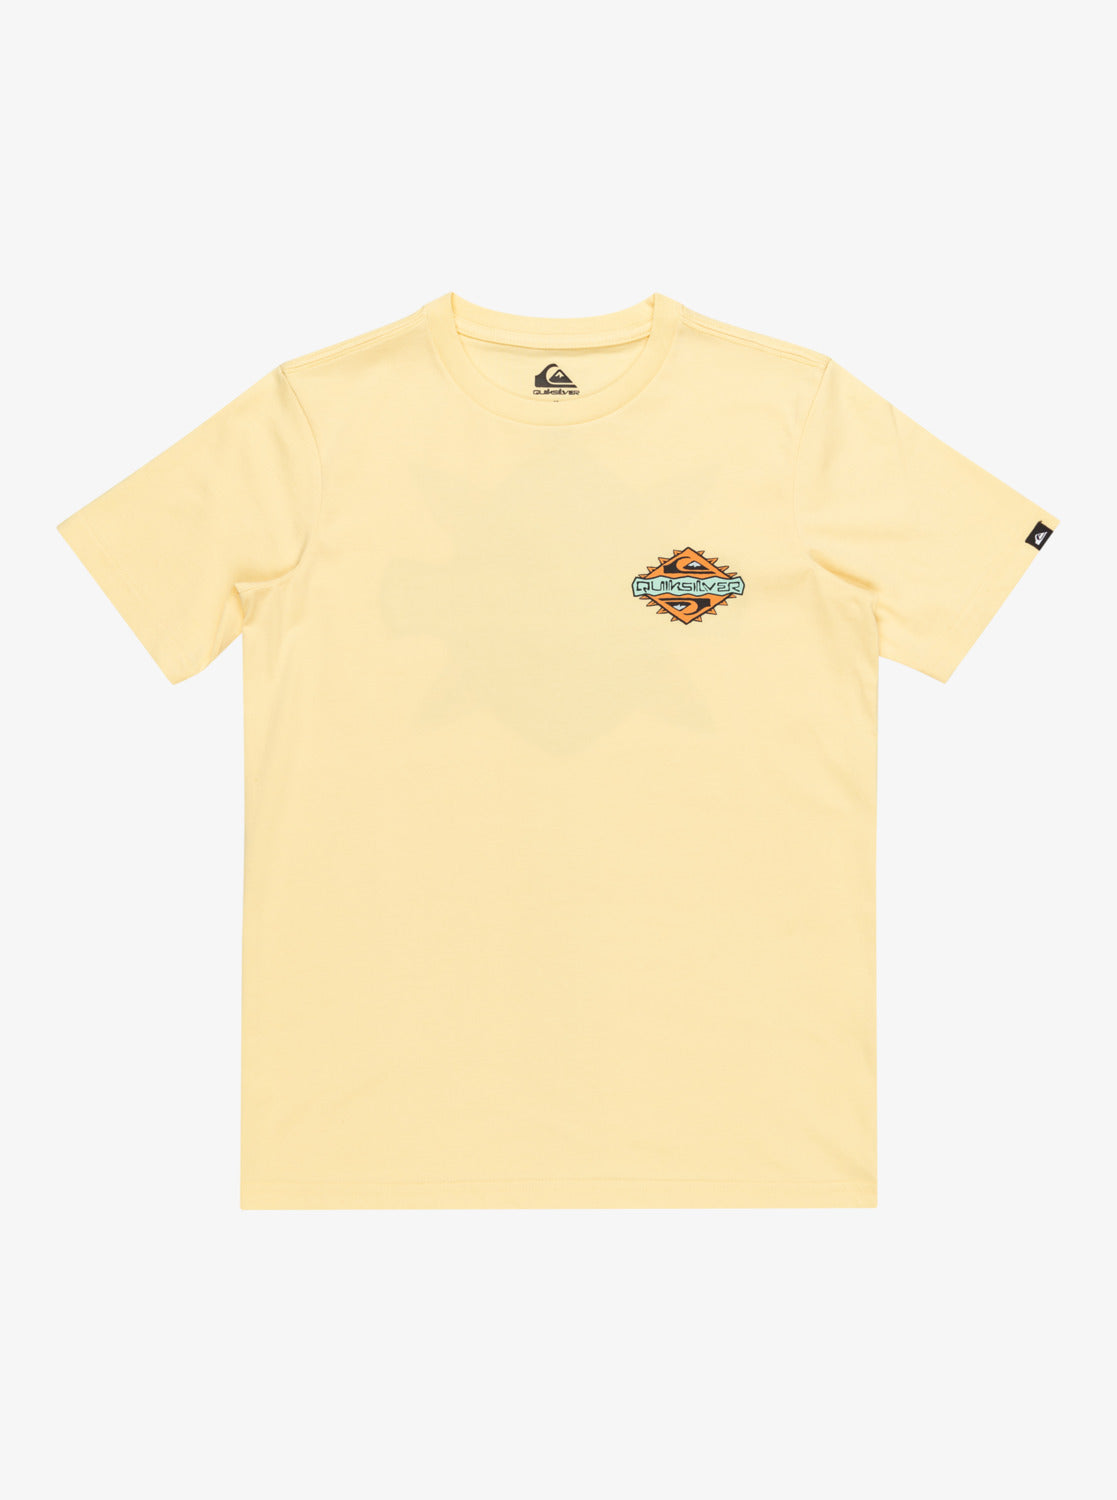 Quiksilver Rainmaker Boys T-Shirt in Mellow Yellow